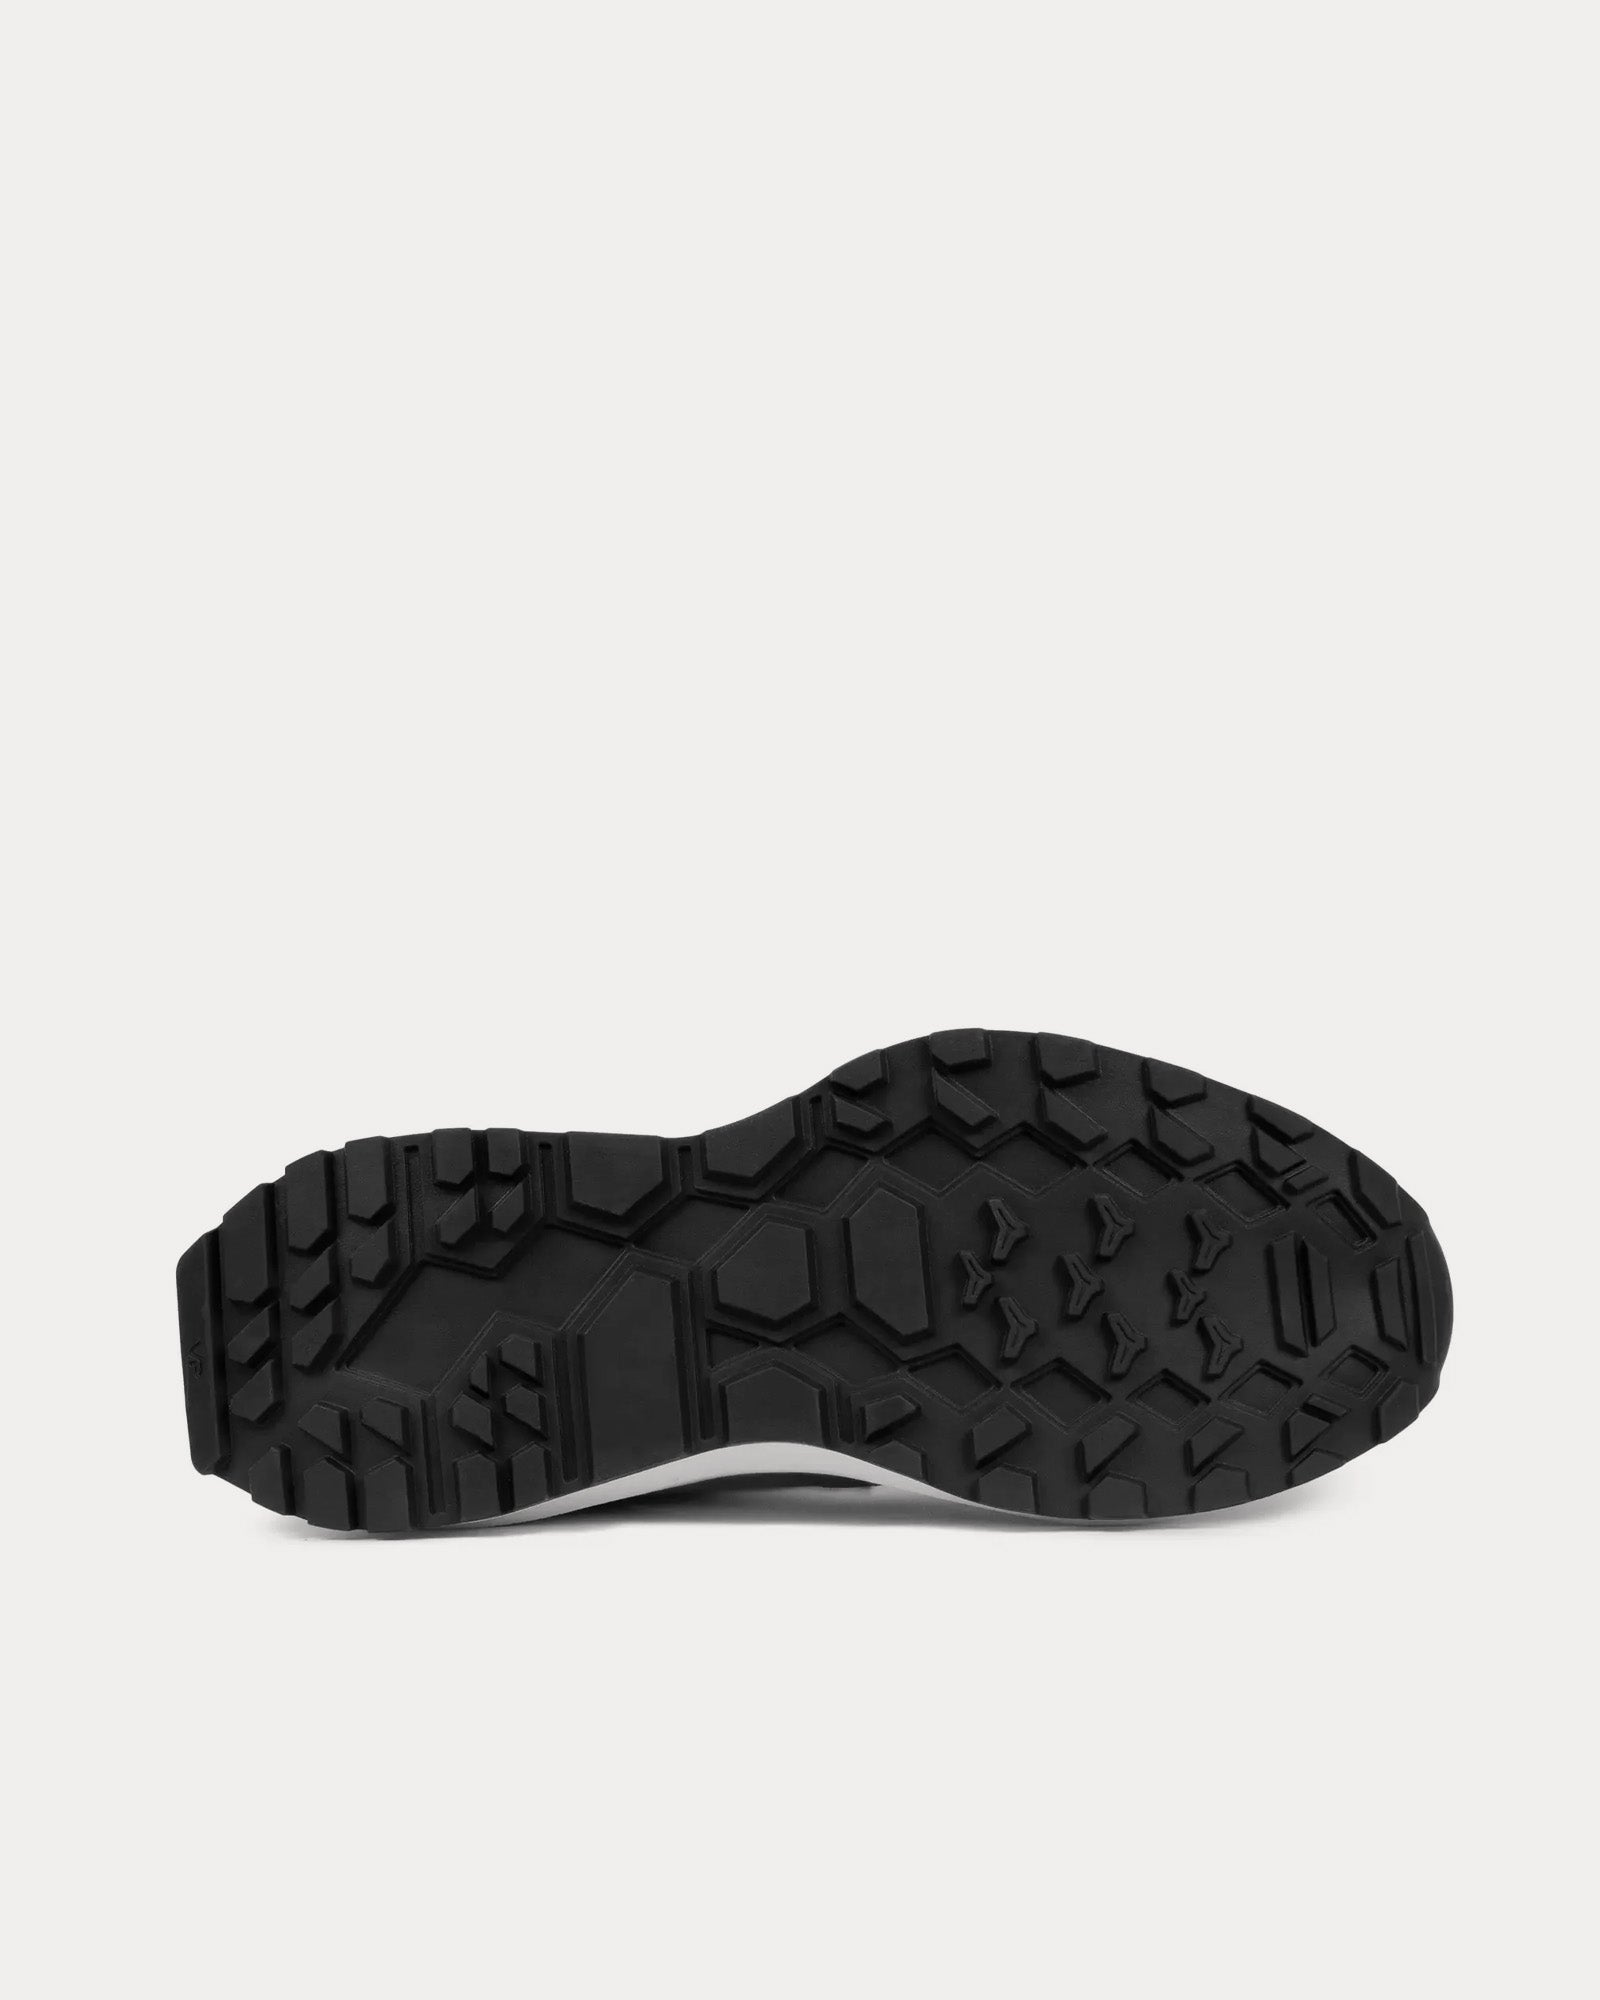 Unseen Footwear - Trinity Leather & Suede White / Bone Low Top Sneakers